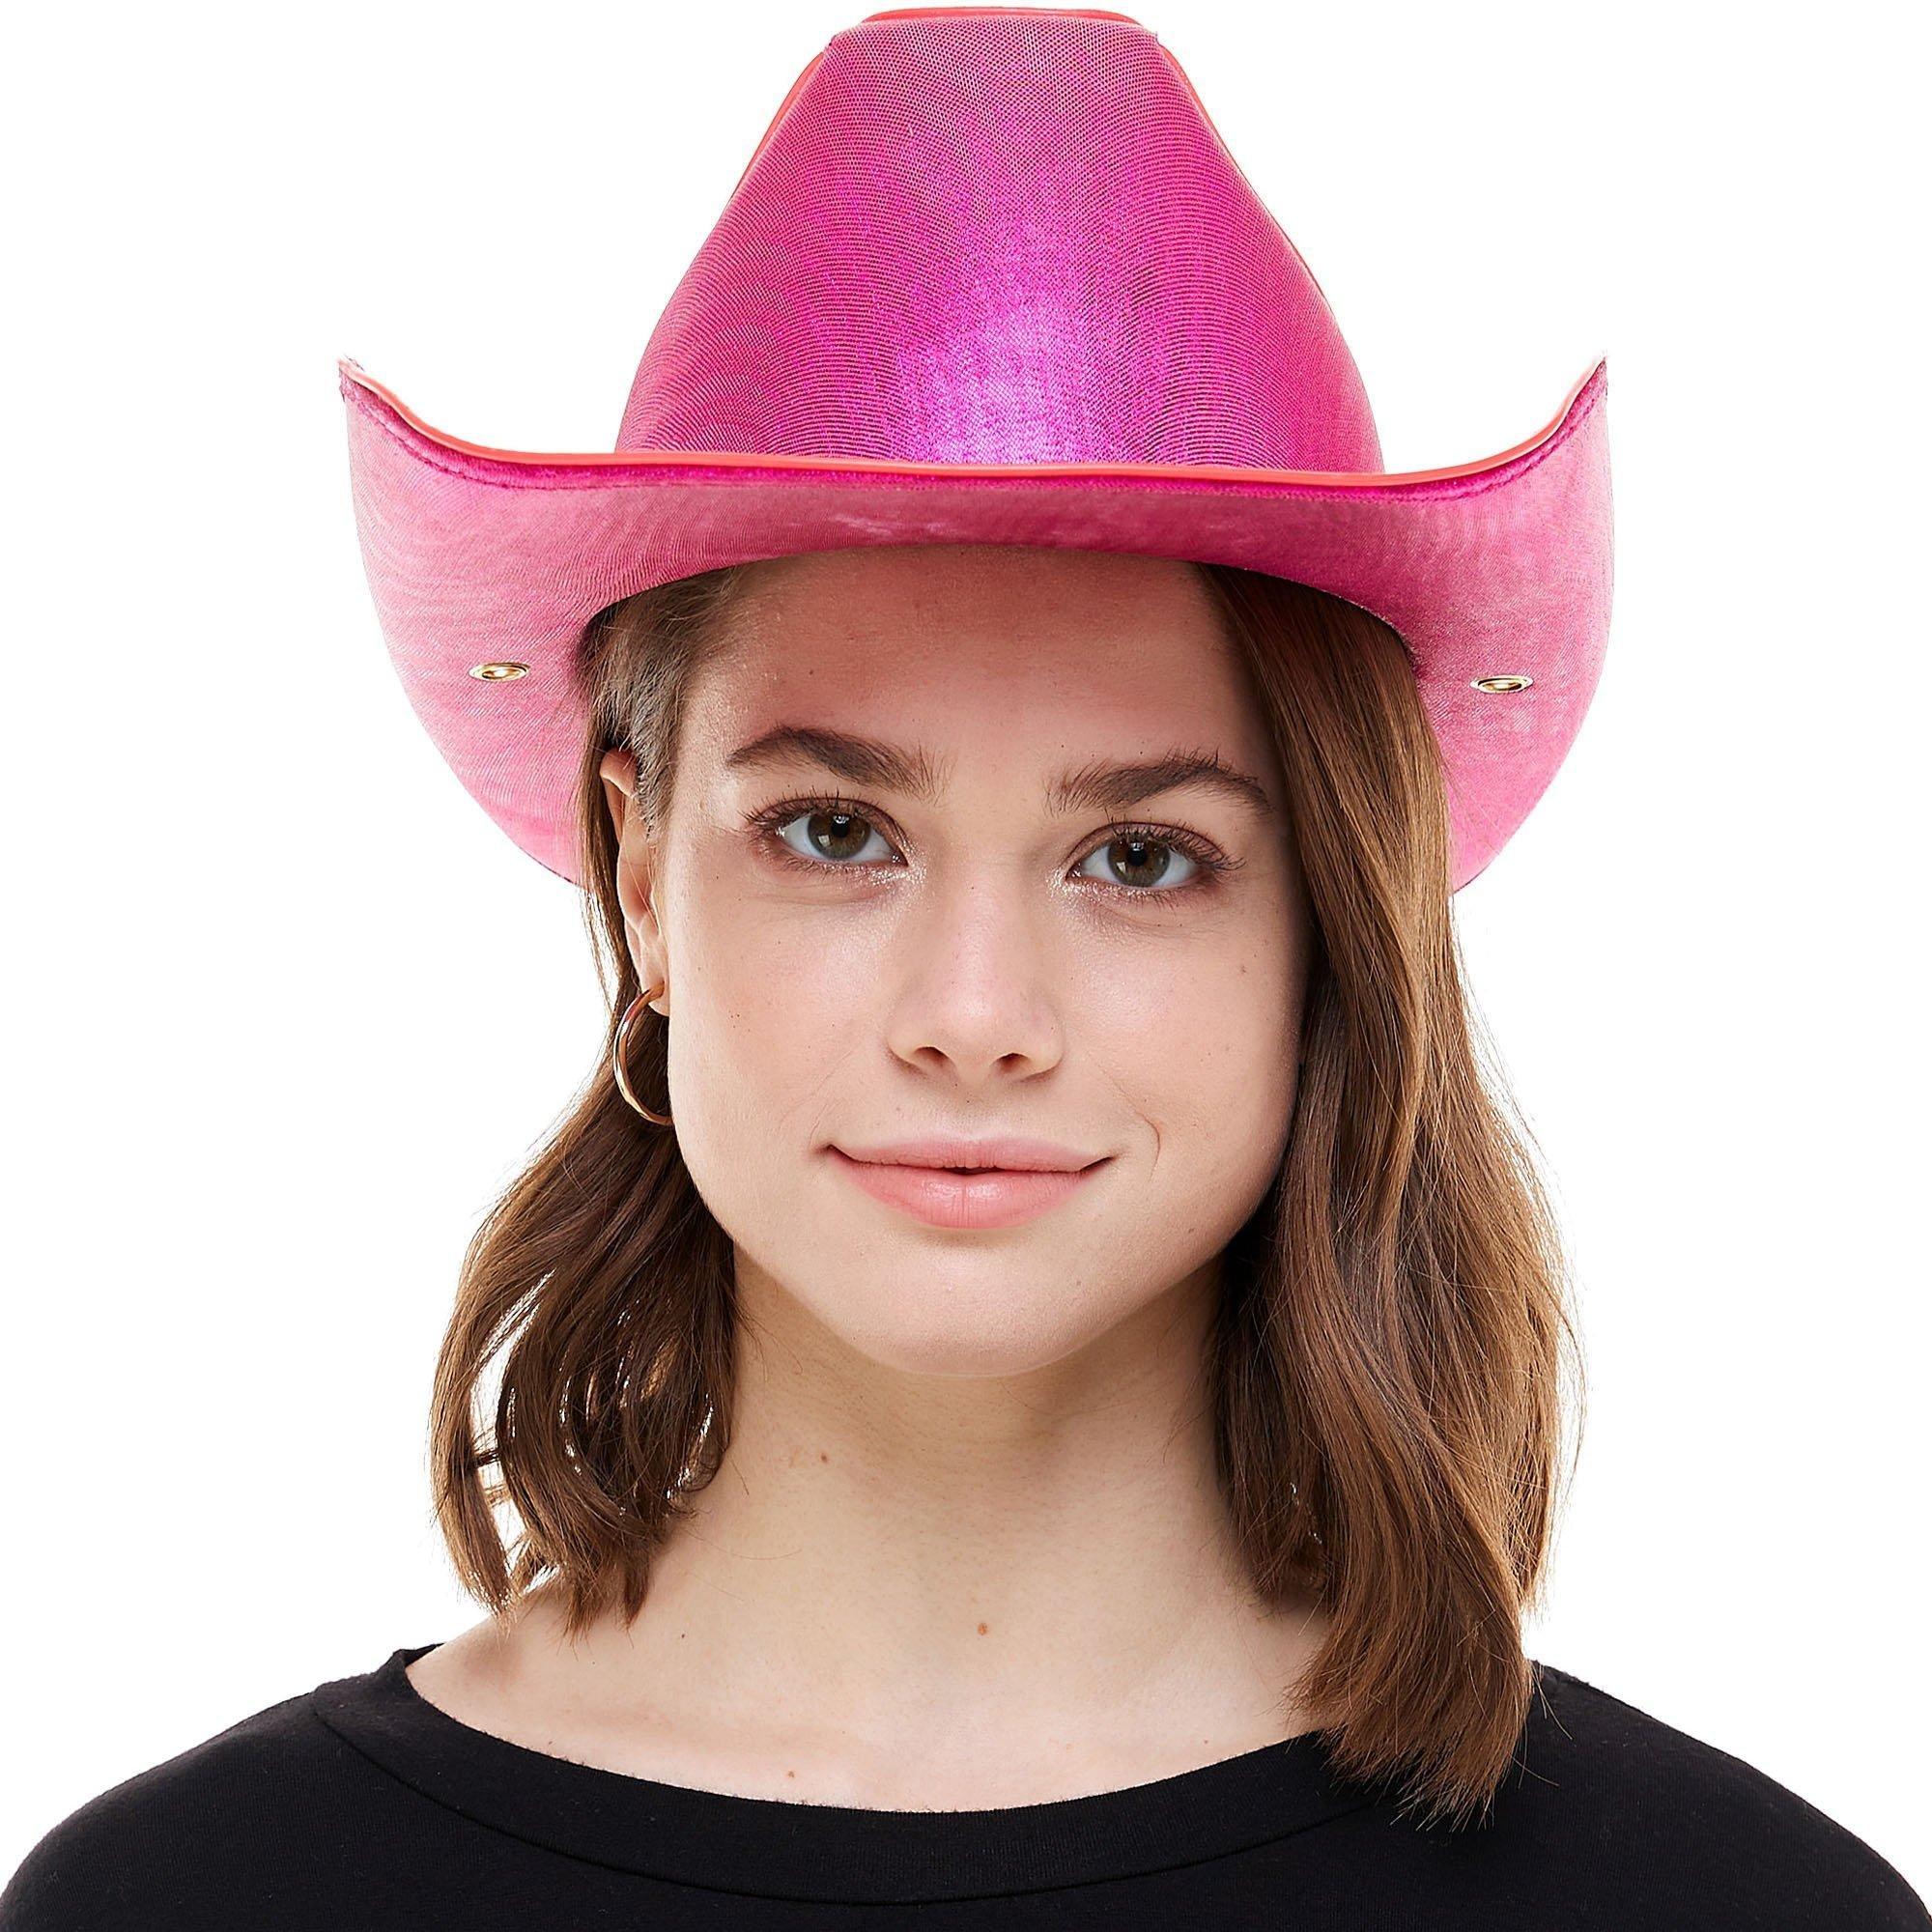 Cowboy Hats Accessories, Cowboy Hat Led Lights